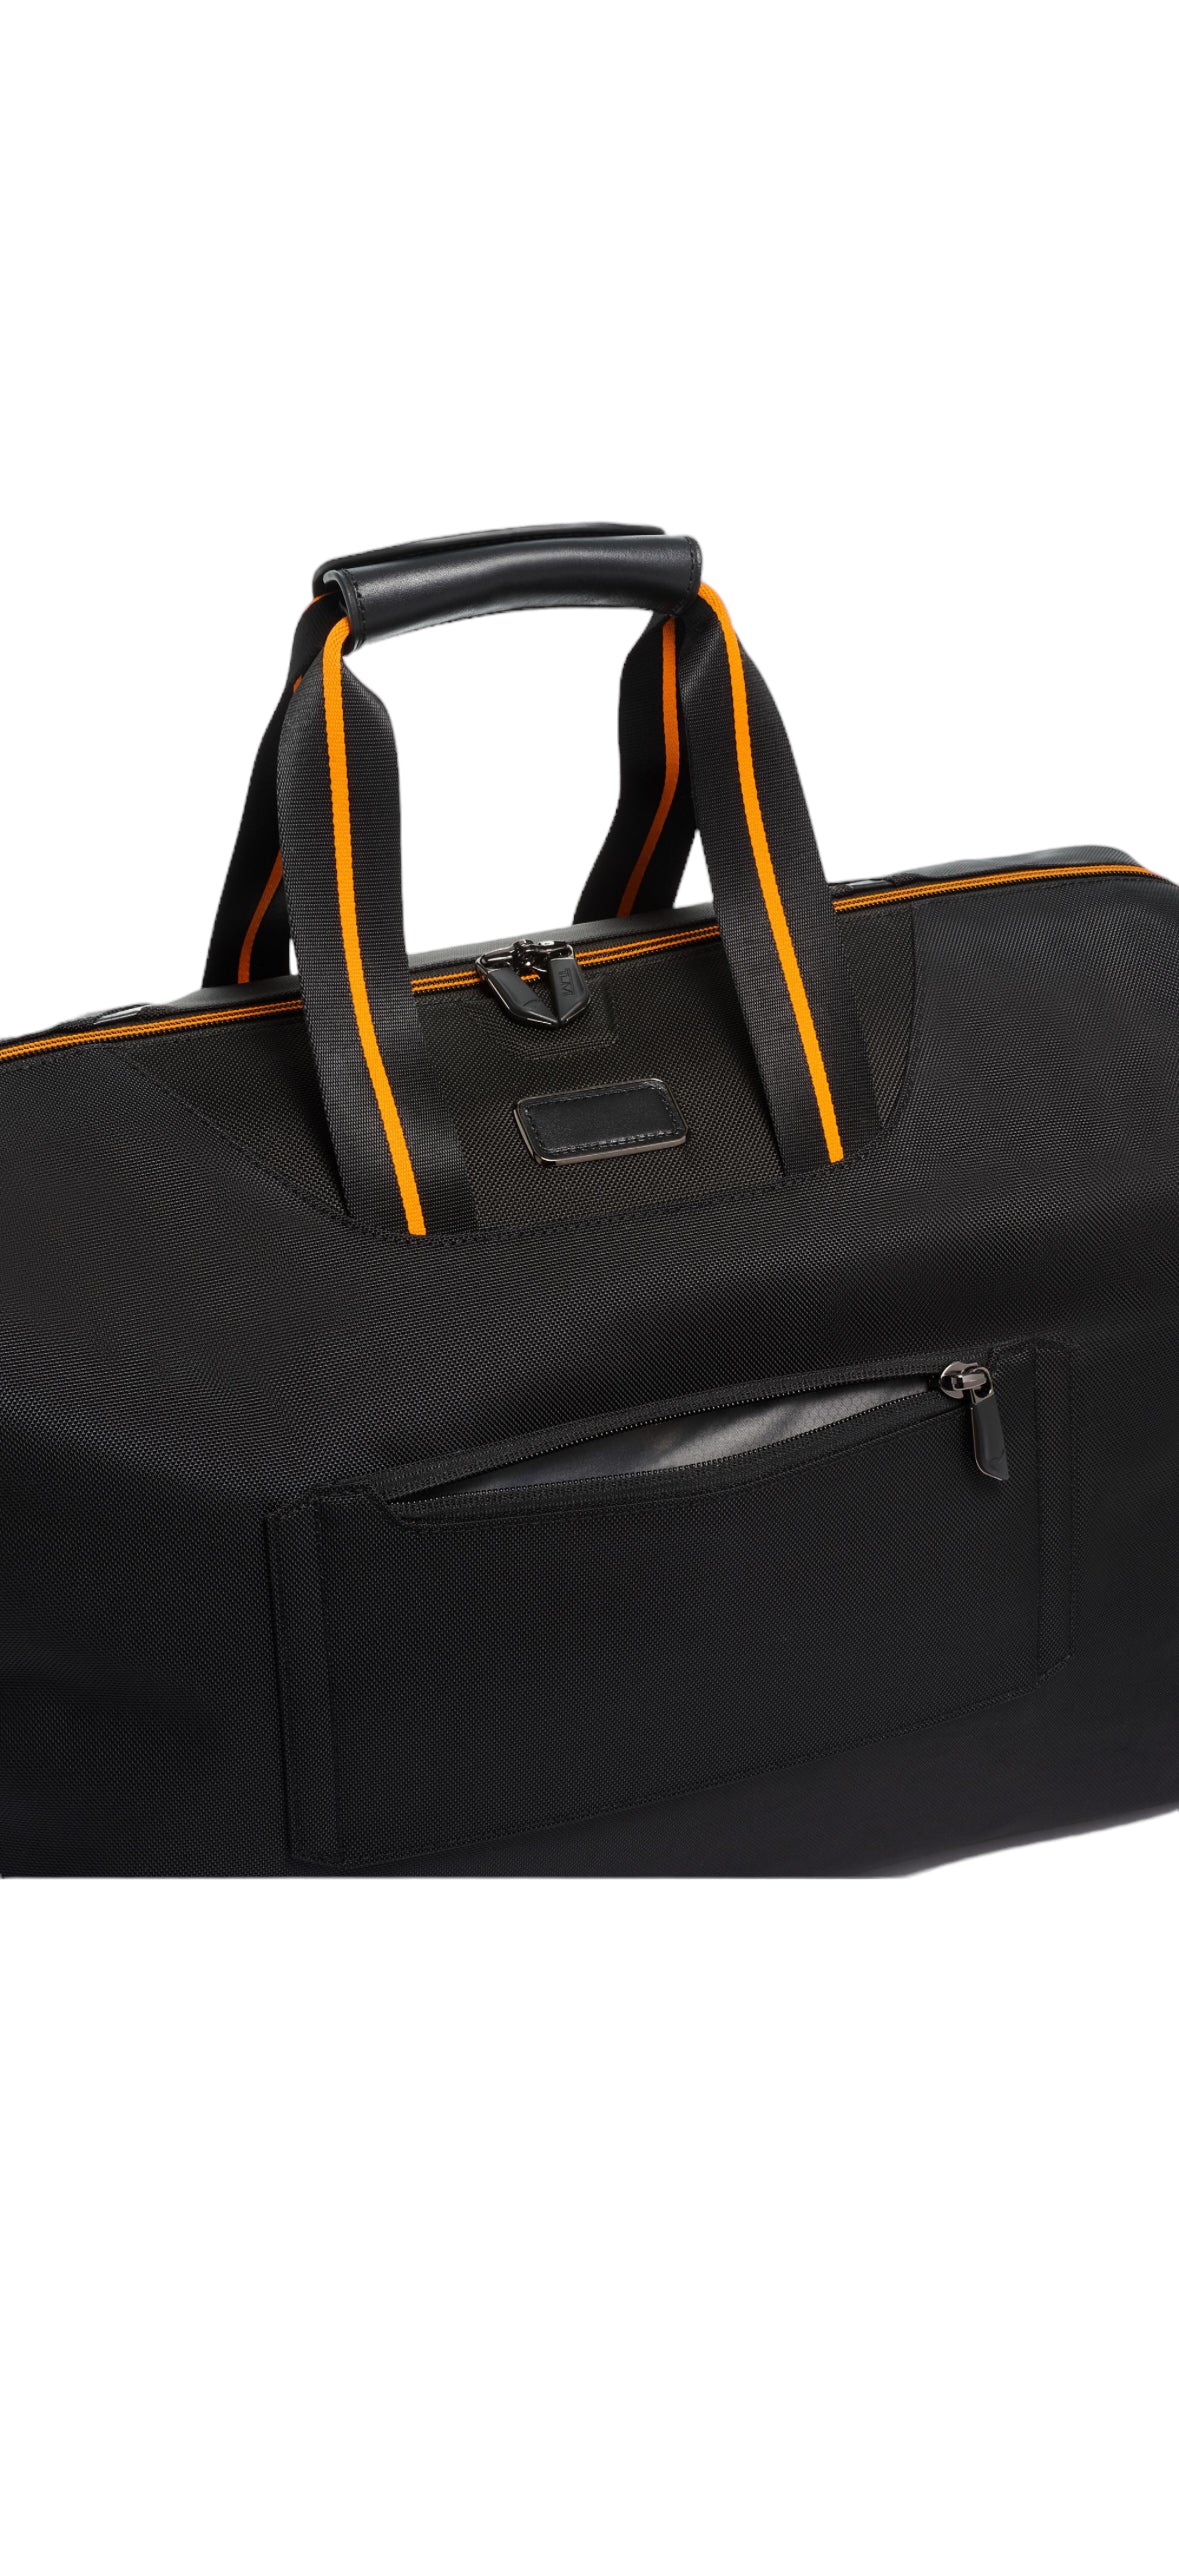 Tumi x Mclaren Black Orange M-Tech Soft Satchel Ballistic Nylon Carryall Travel Tote Bag